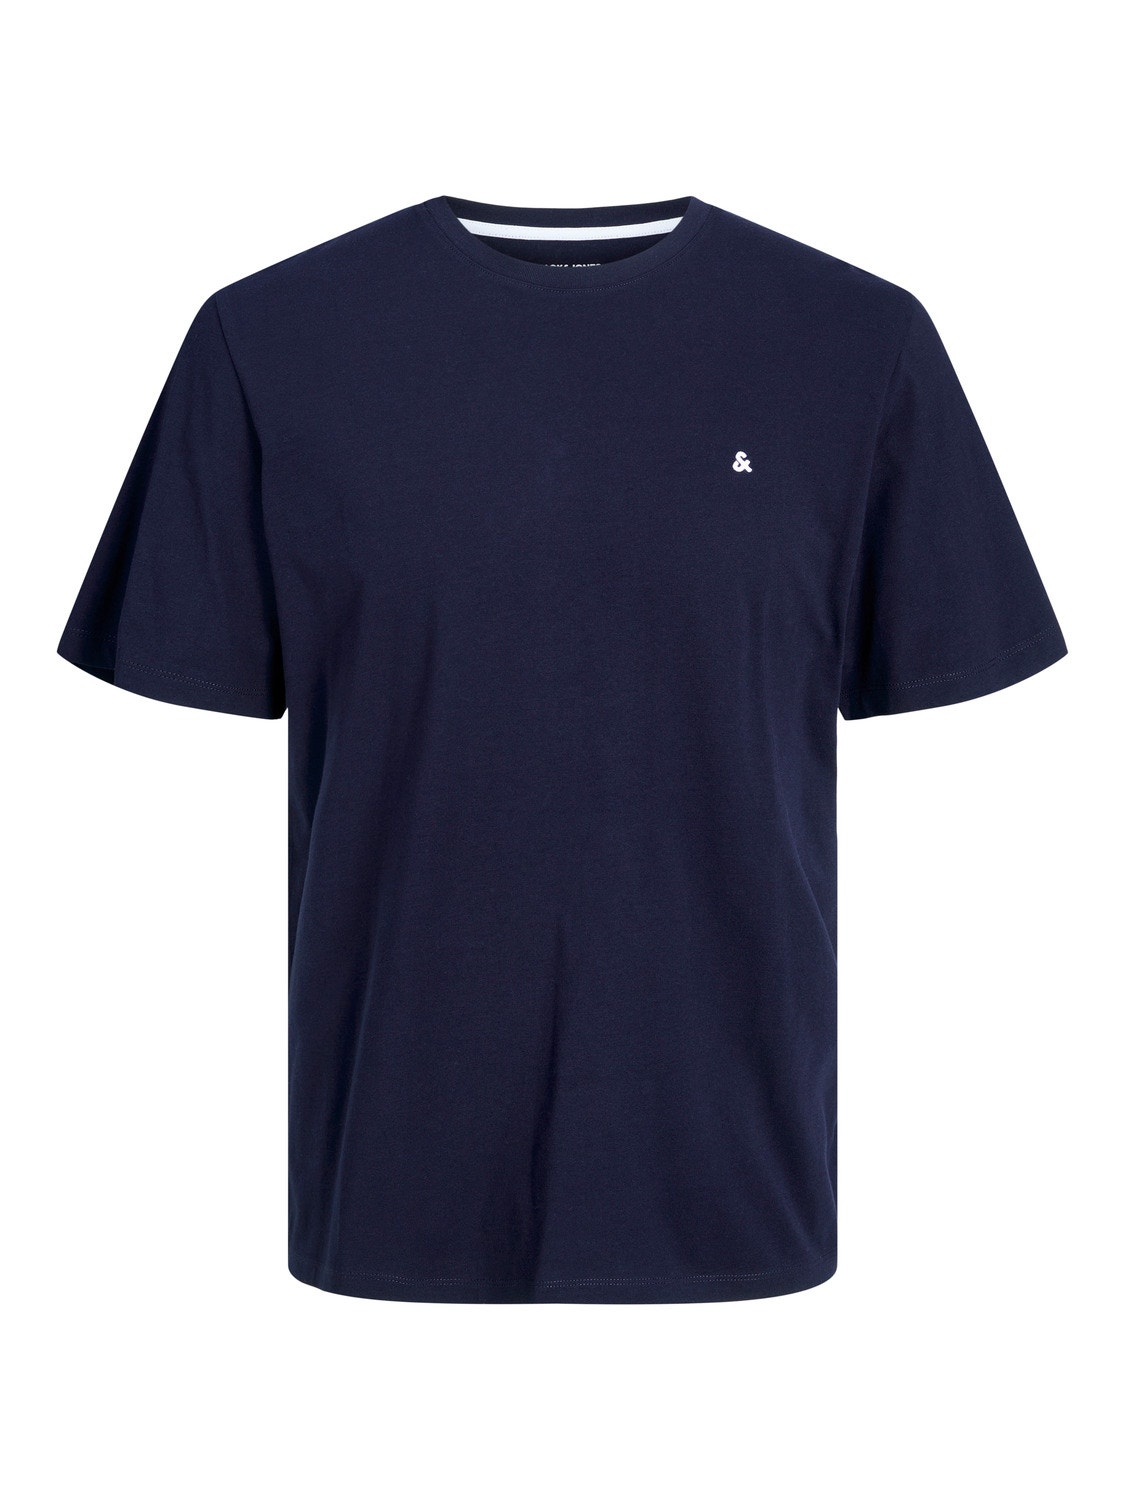 Jack & Jones Basic Crew neck T-shirt -Navy Blazer - 12245087